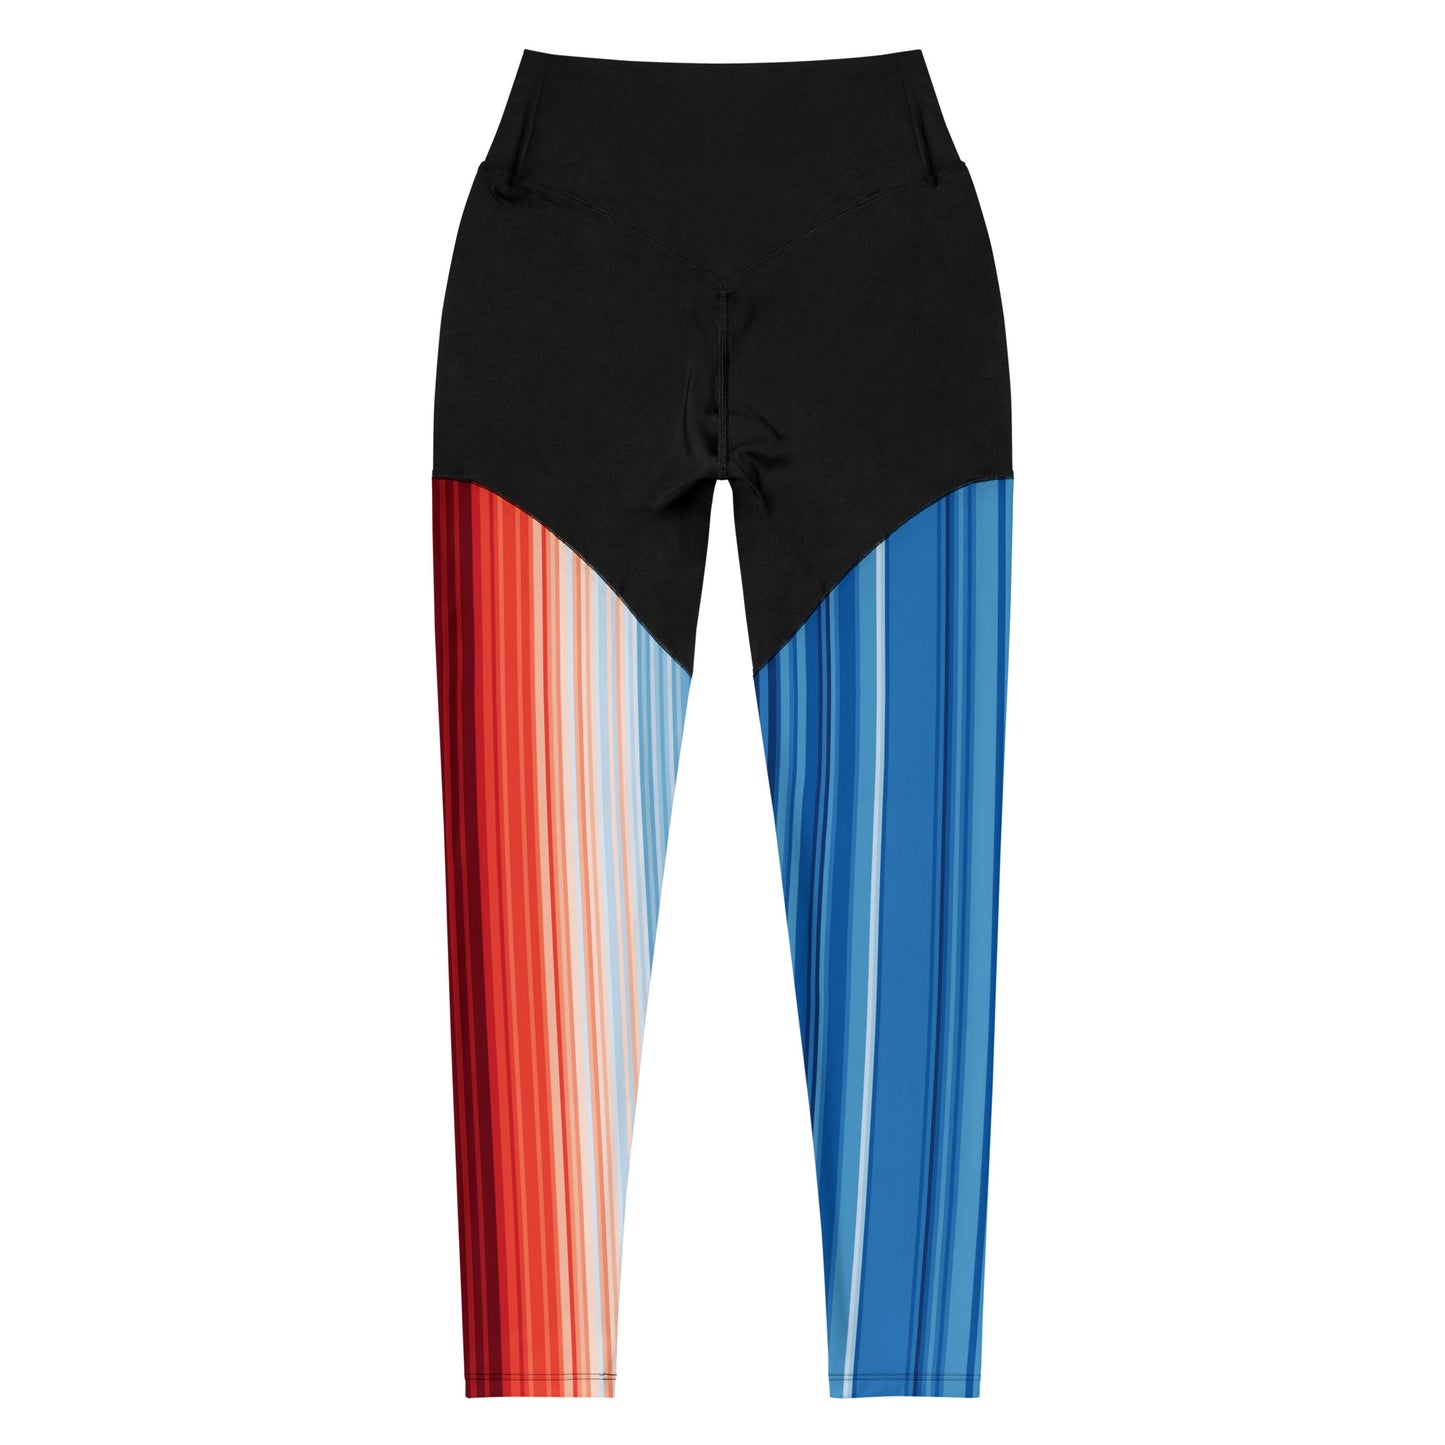 Warming Stripes | High Waist Compression Sport Leggings